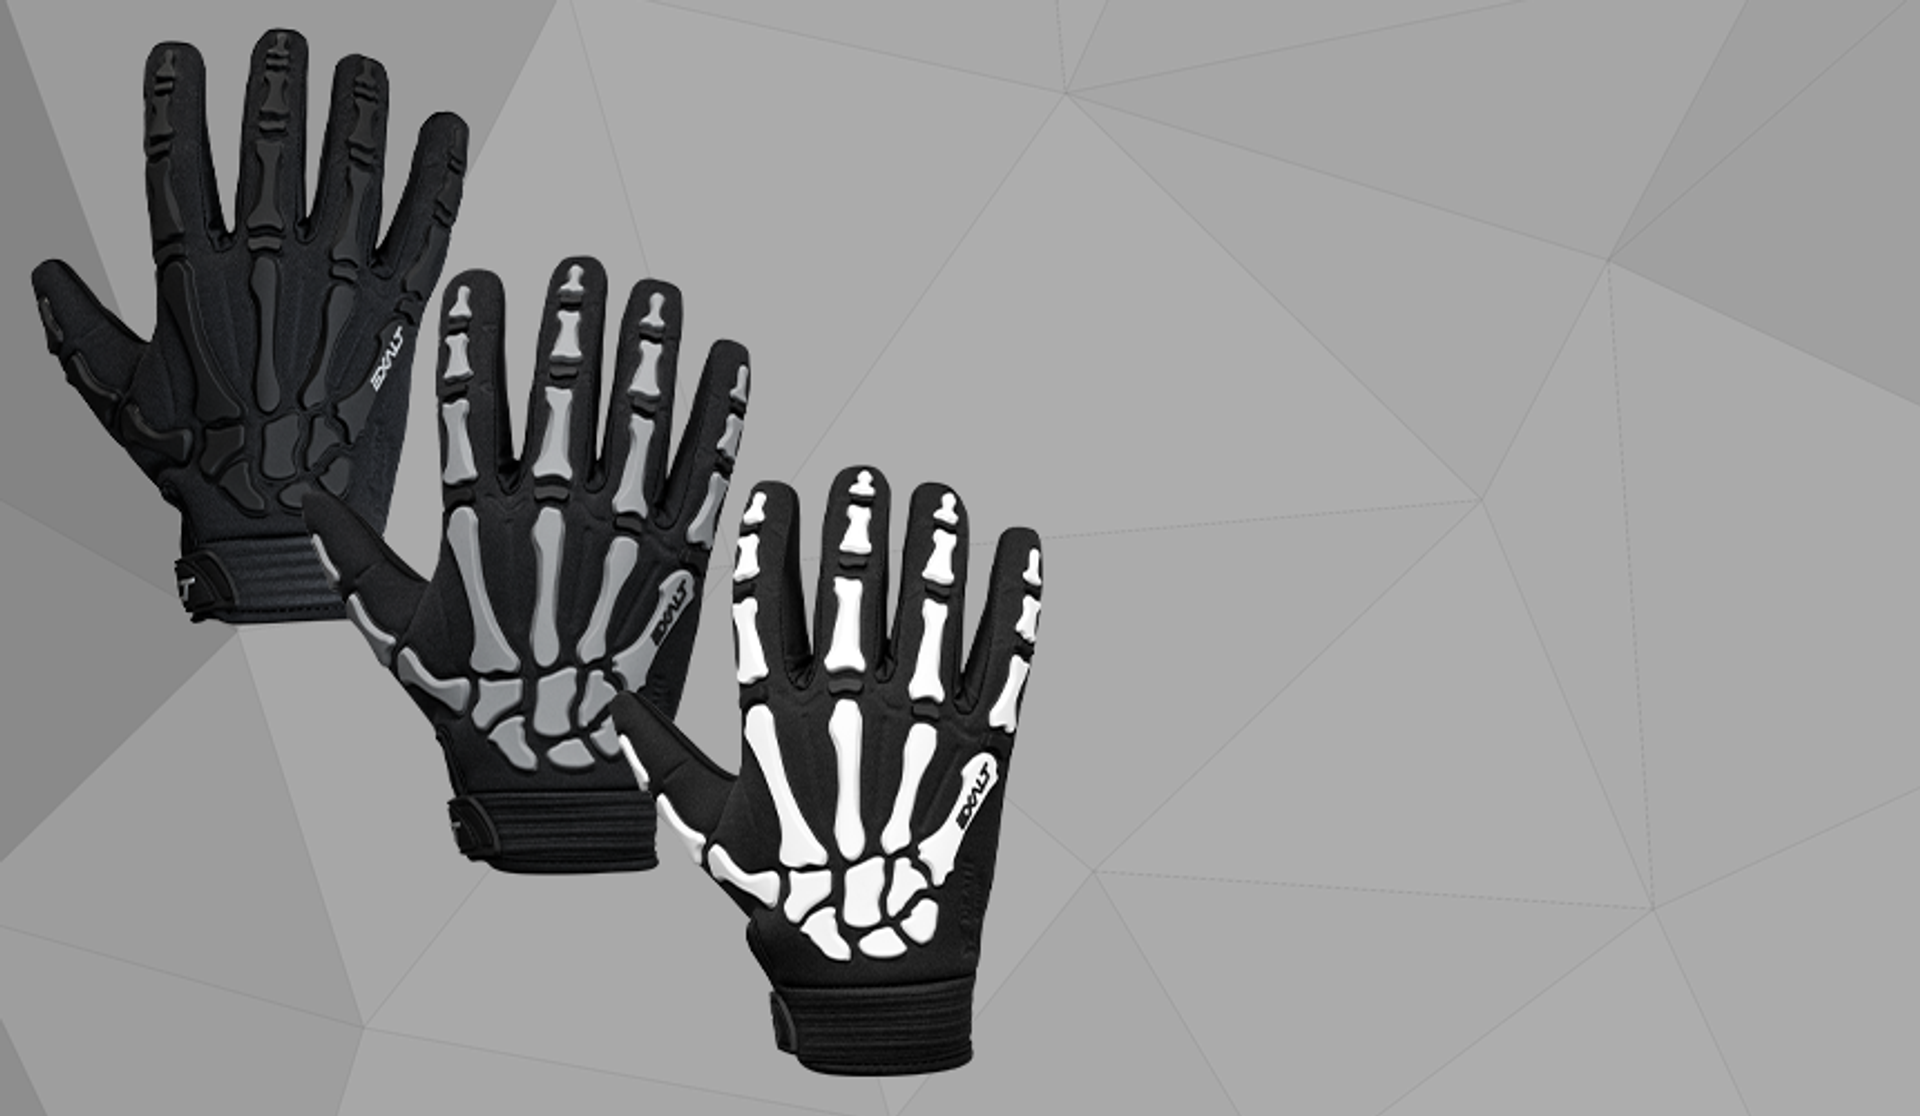 Exalt Paintball Skeleton Hand Death Grip Padded Gloves Black Small